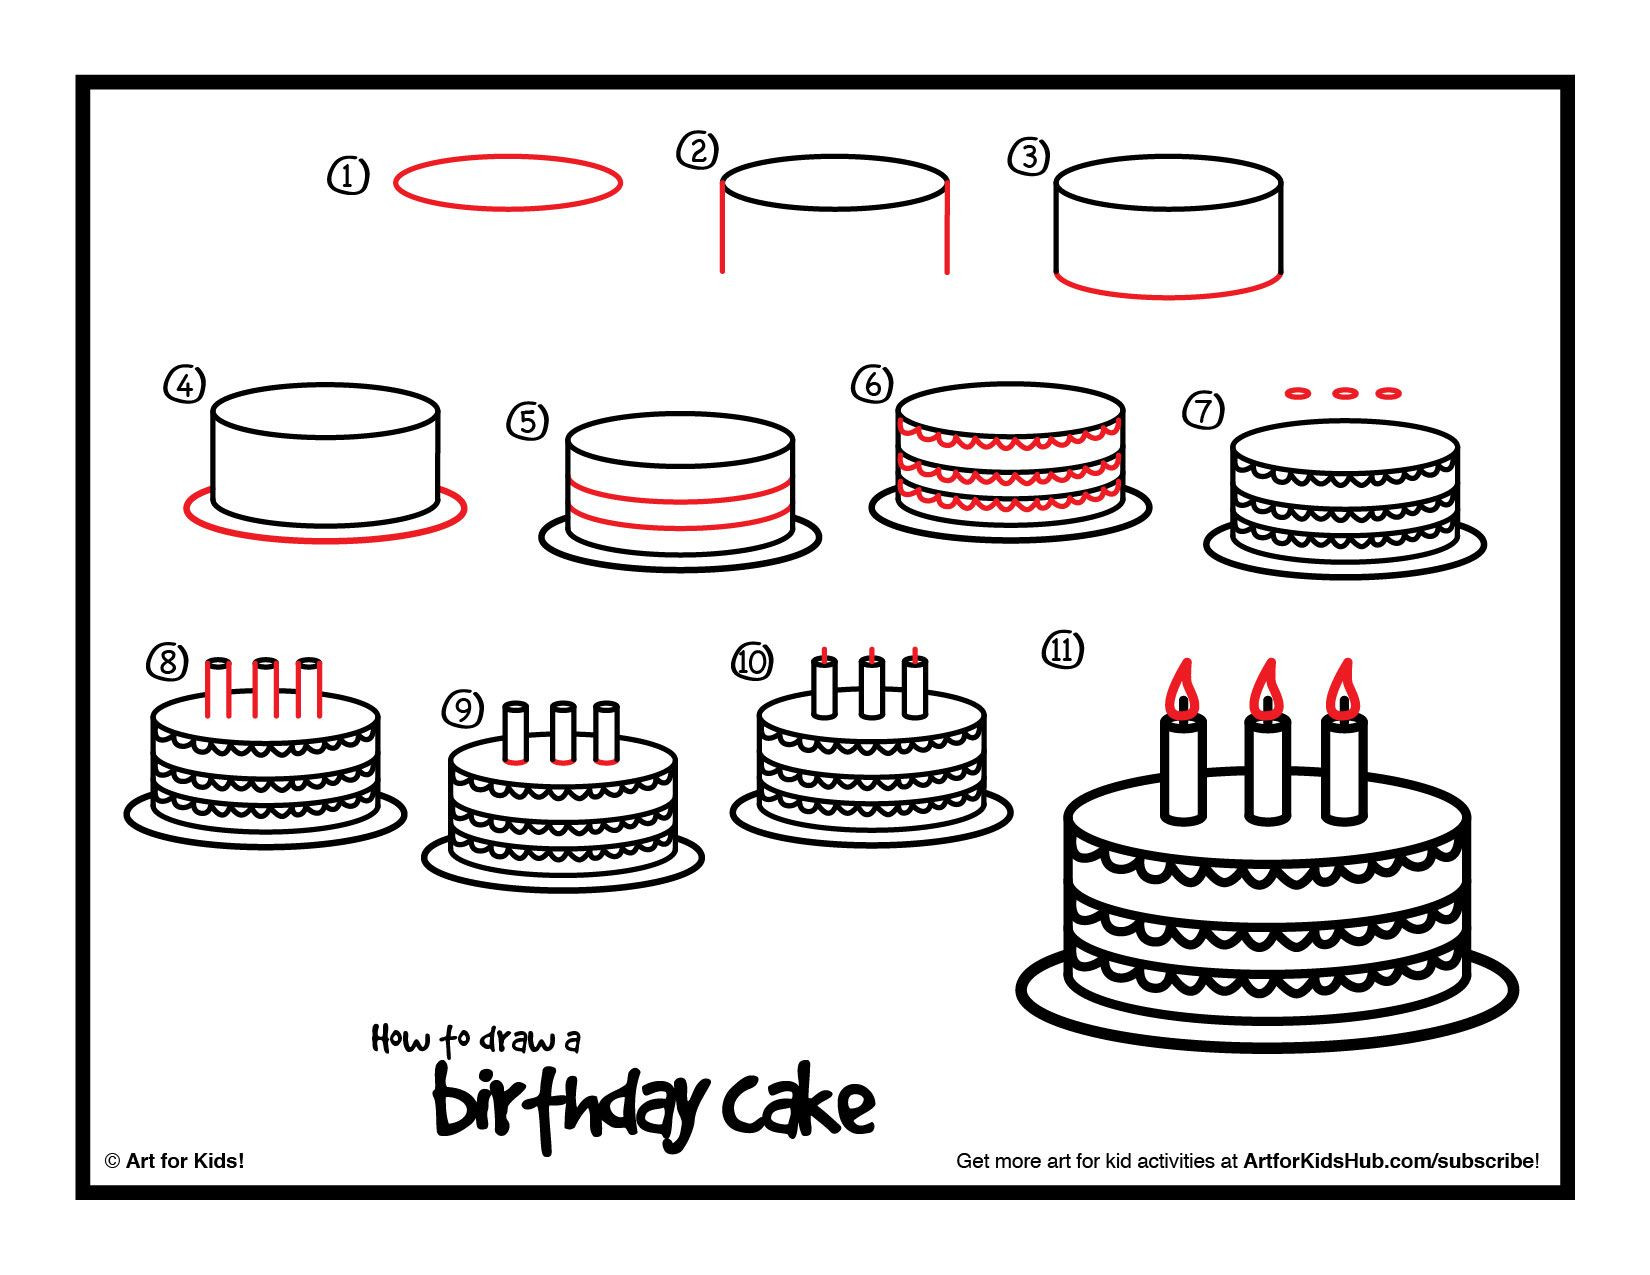 How To Draw Birthday Cake
 How To Draw A Birthday Cake Art for Kids Hub